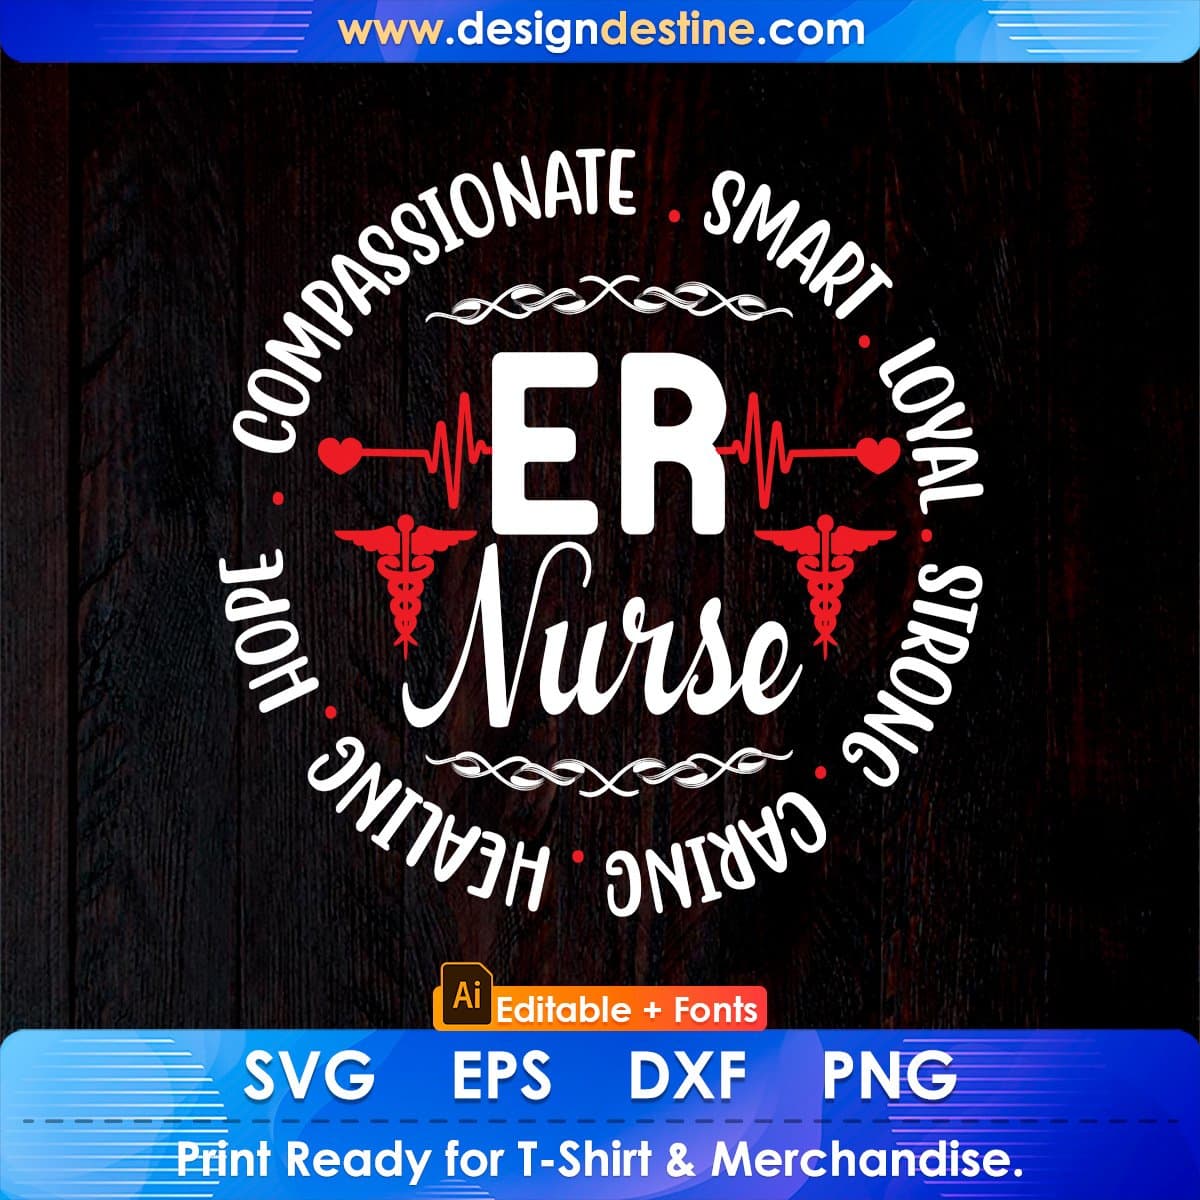 Emergency Room Registered Nurse Hospital RN Staff Editable T shirt Design In Ai Svg Files